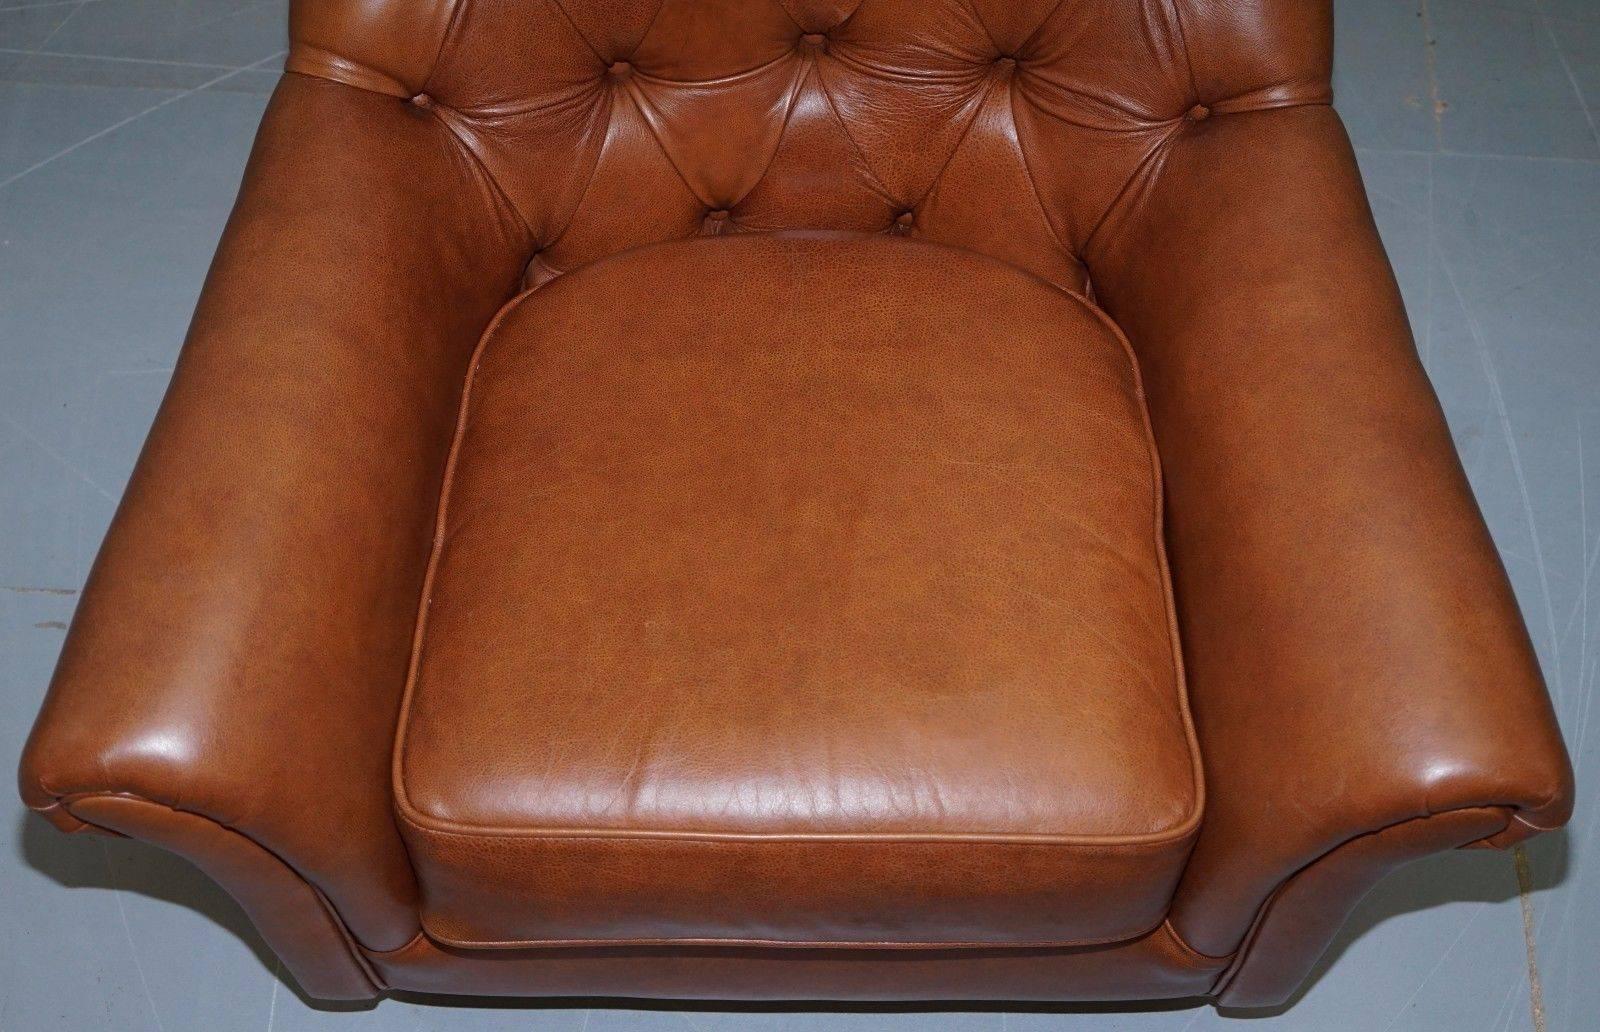 thomas lloyd chesterfield sofa